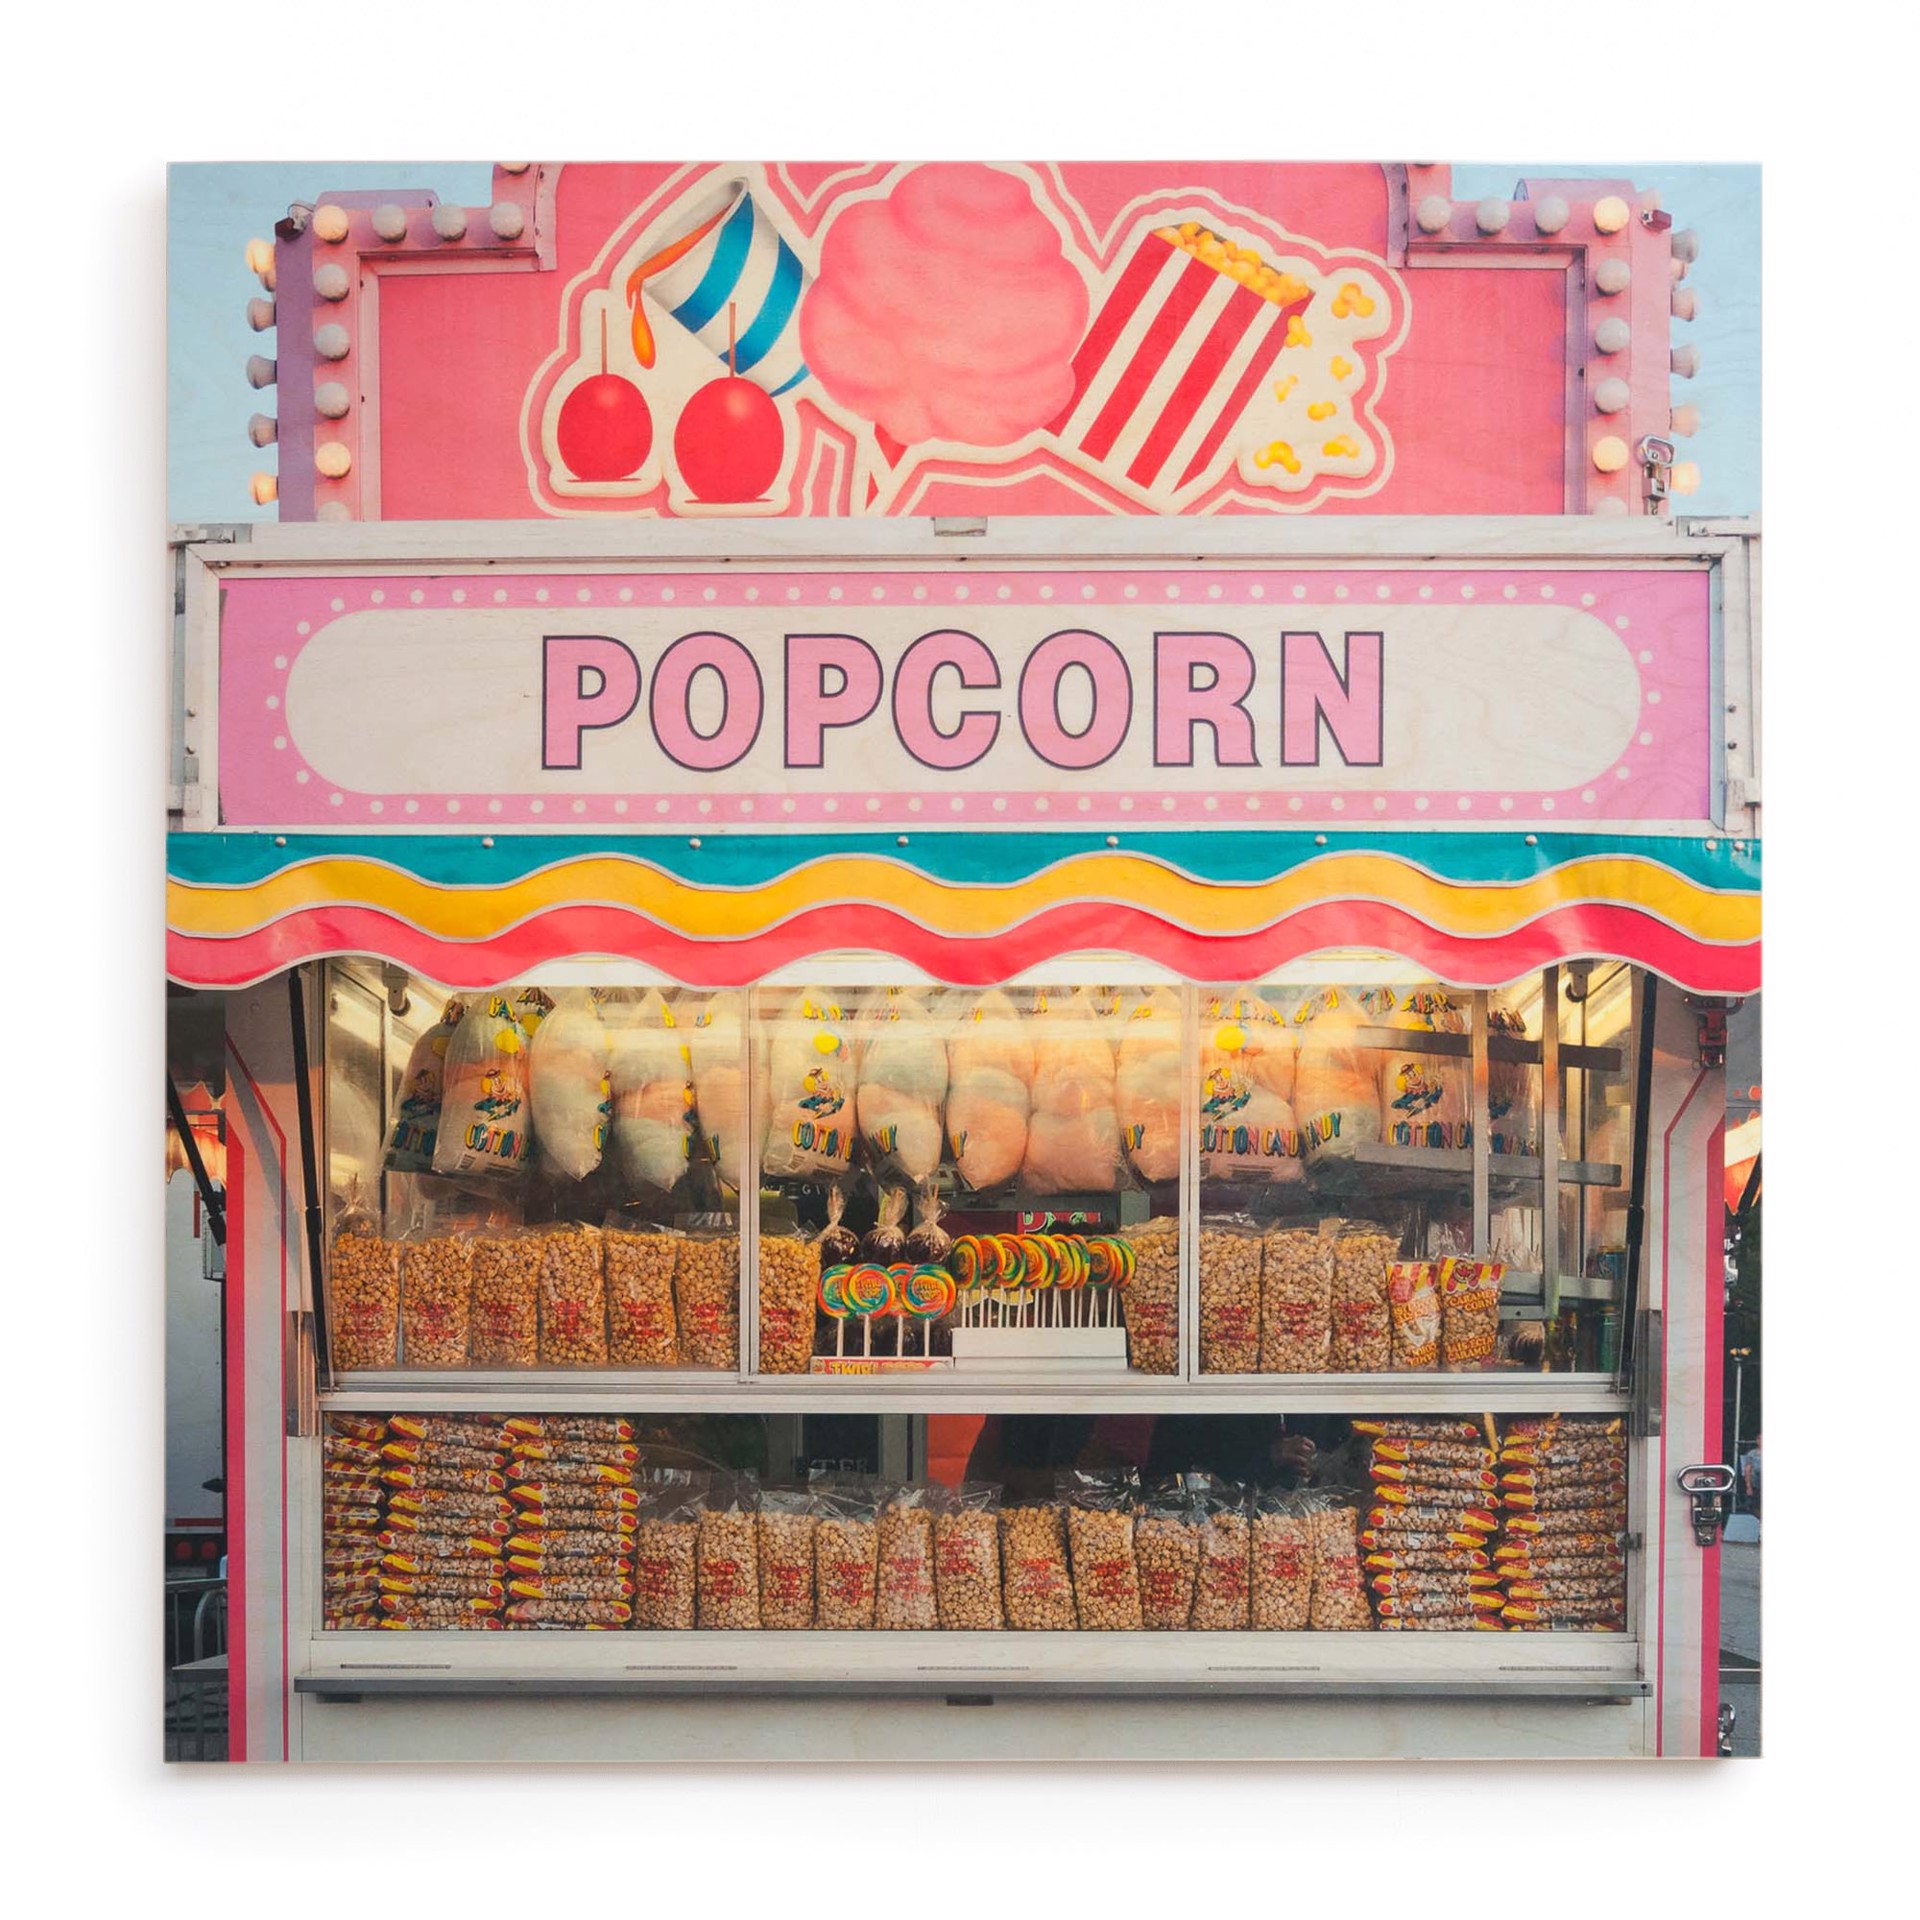 Popcorn by Patrick Lajoie